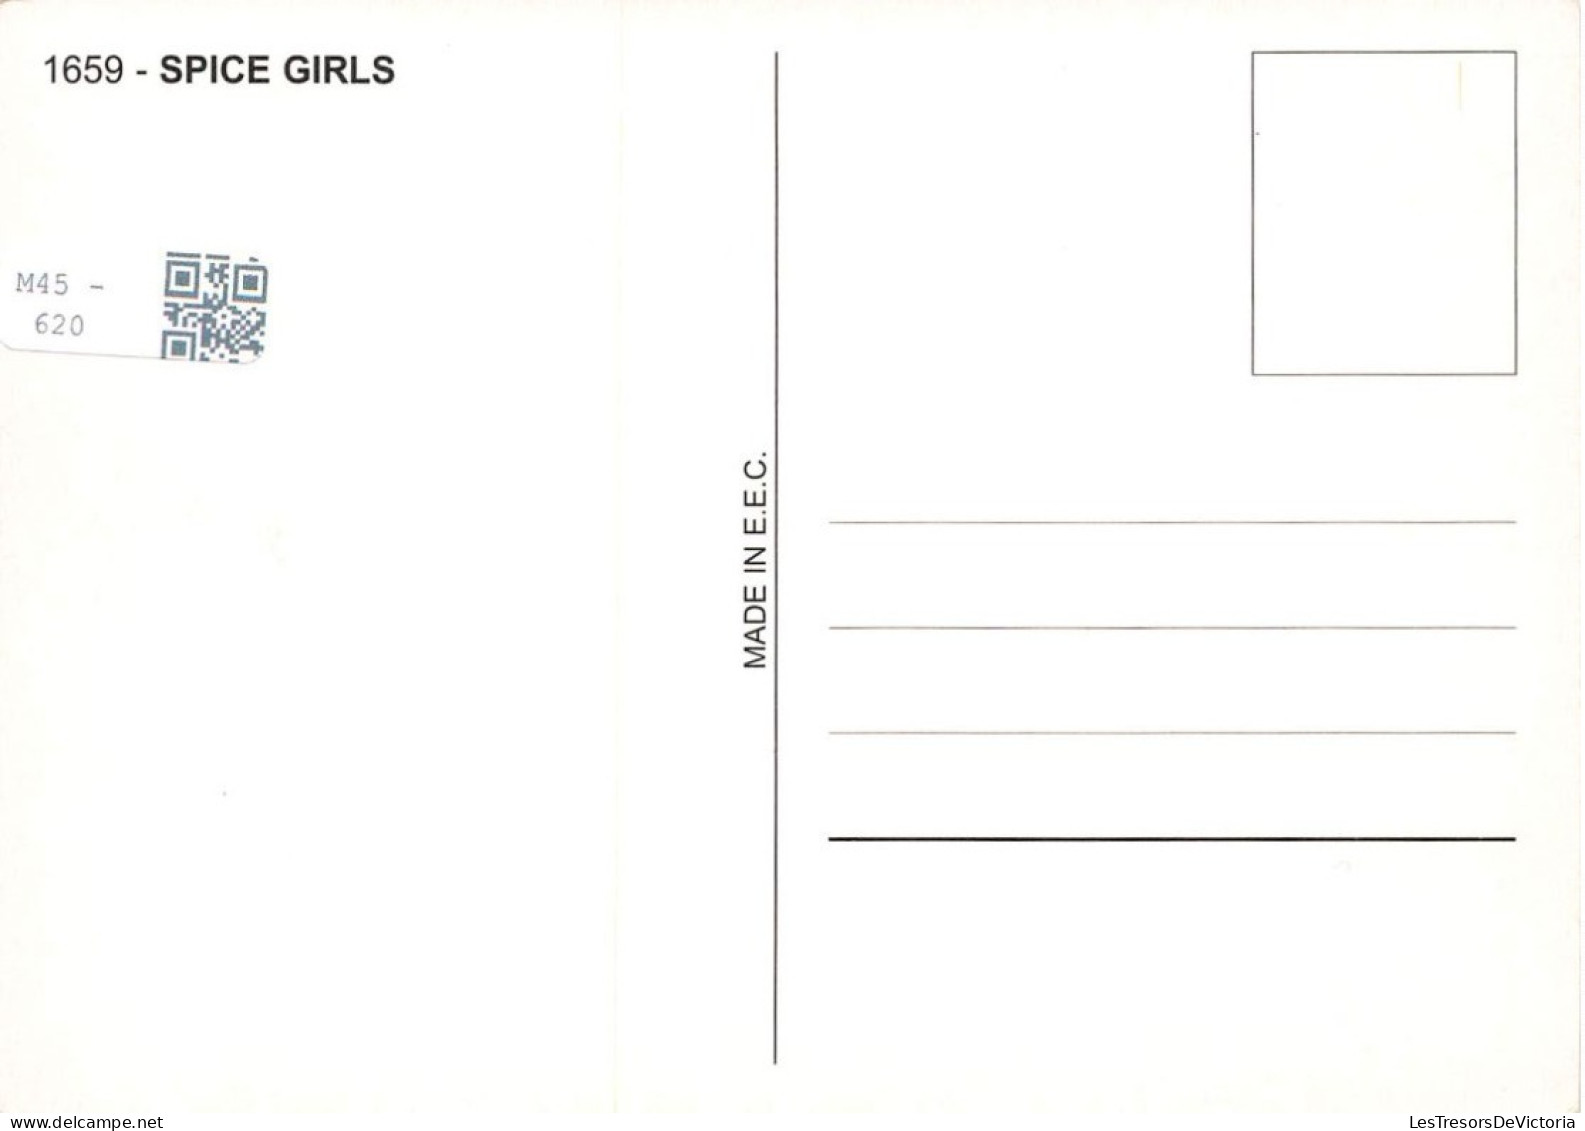 CELEBRITES - Spice Girls - Colorisé - Carte Postale - Sänger Und Musikanten